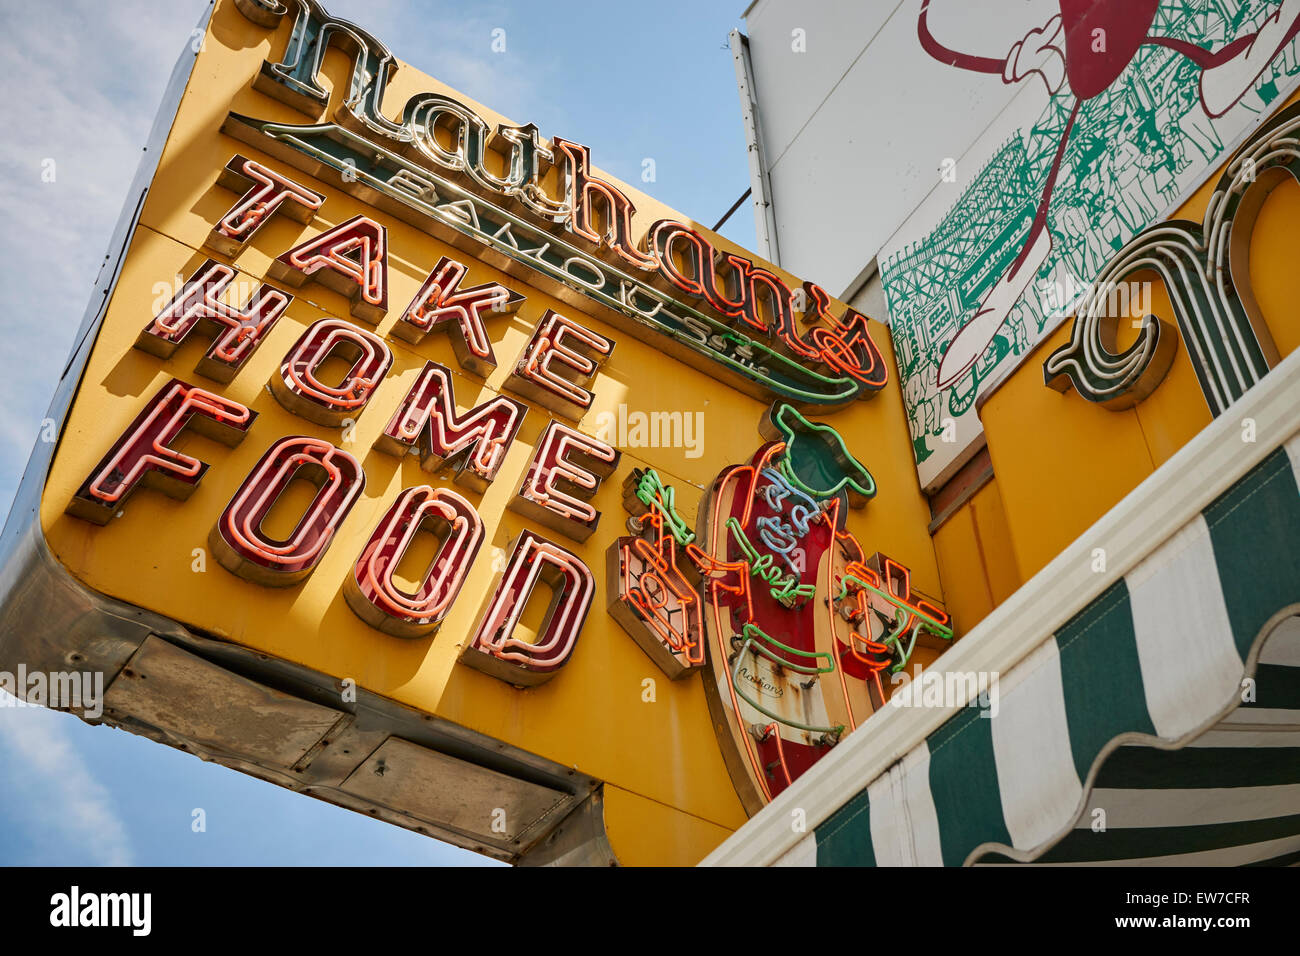 Nathan's Hot Dog Sign, Coney Island, Brooklyn, New York, USA Stock Photo